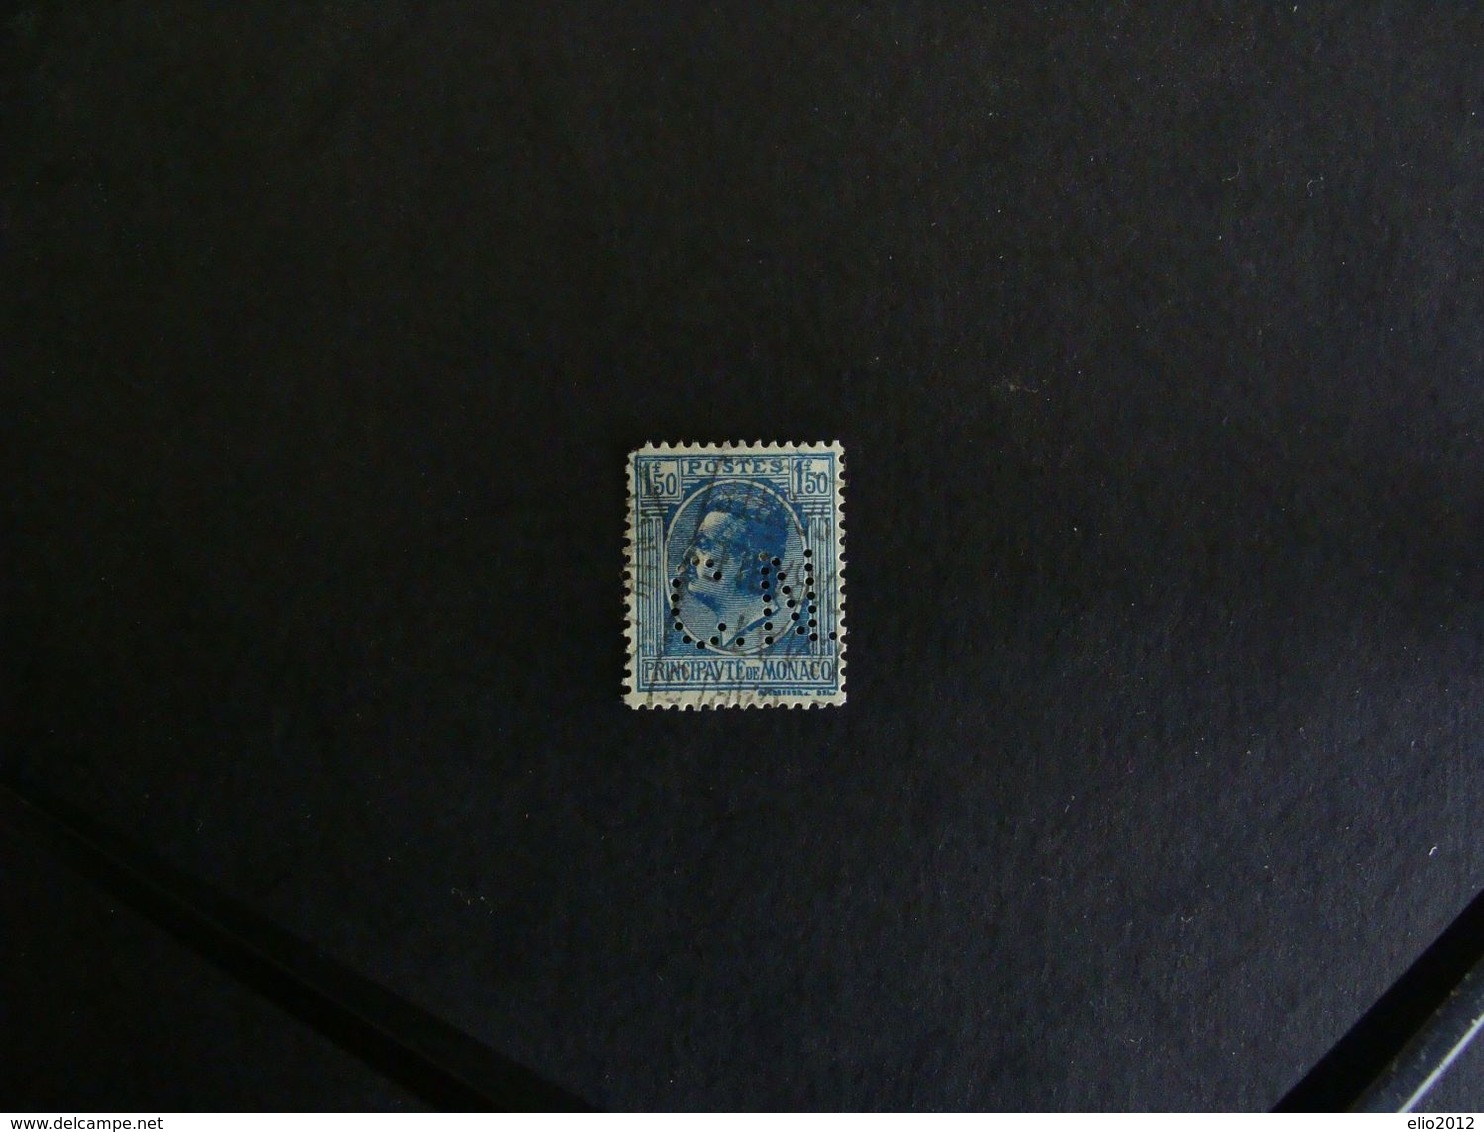 Perfin-Monaco 1924-33 - Francobollo,Stamps-perforè,perfins,perforated - Oblitérés